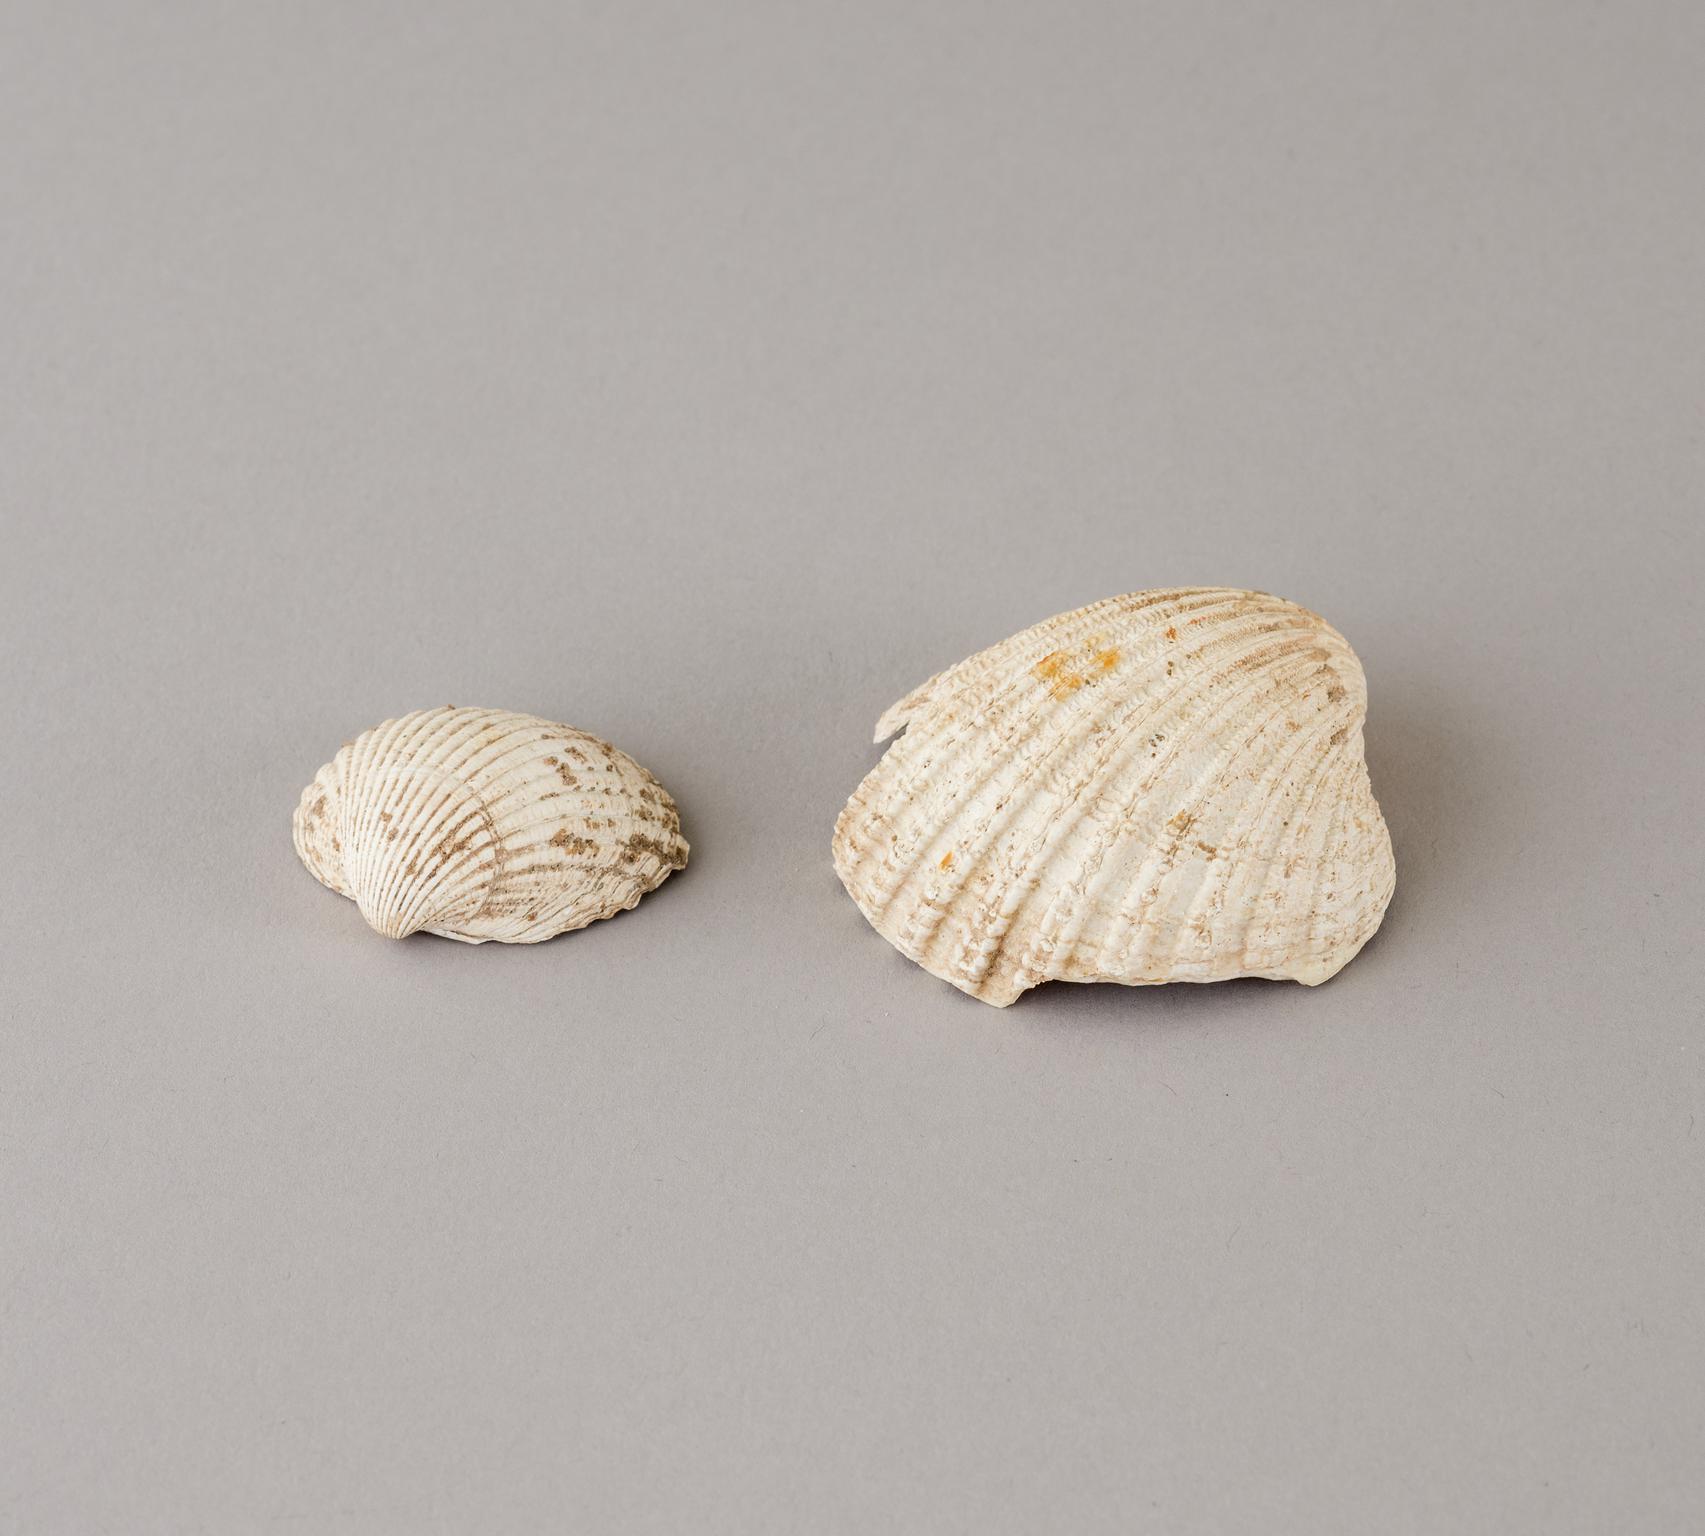 Roman cockle shell